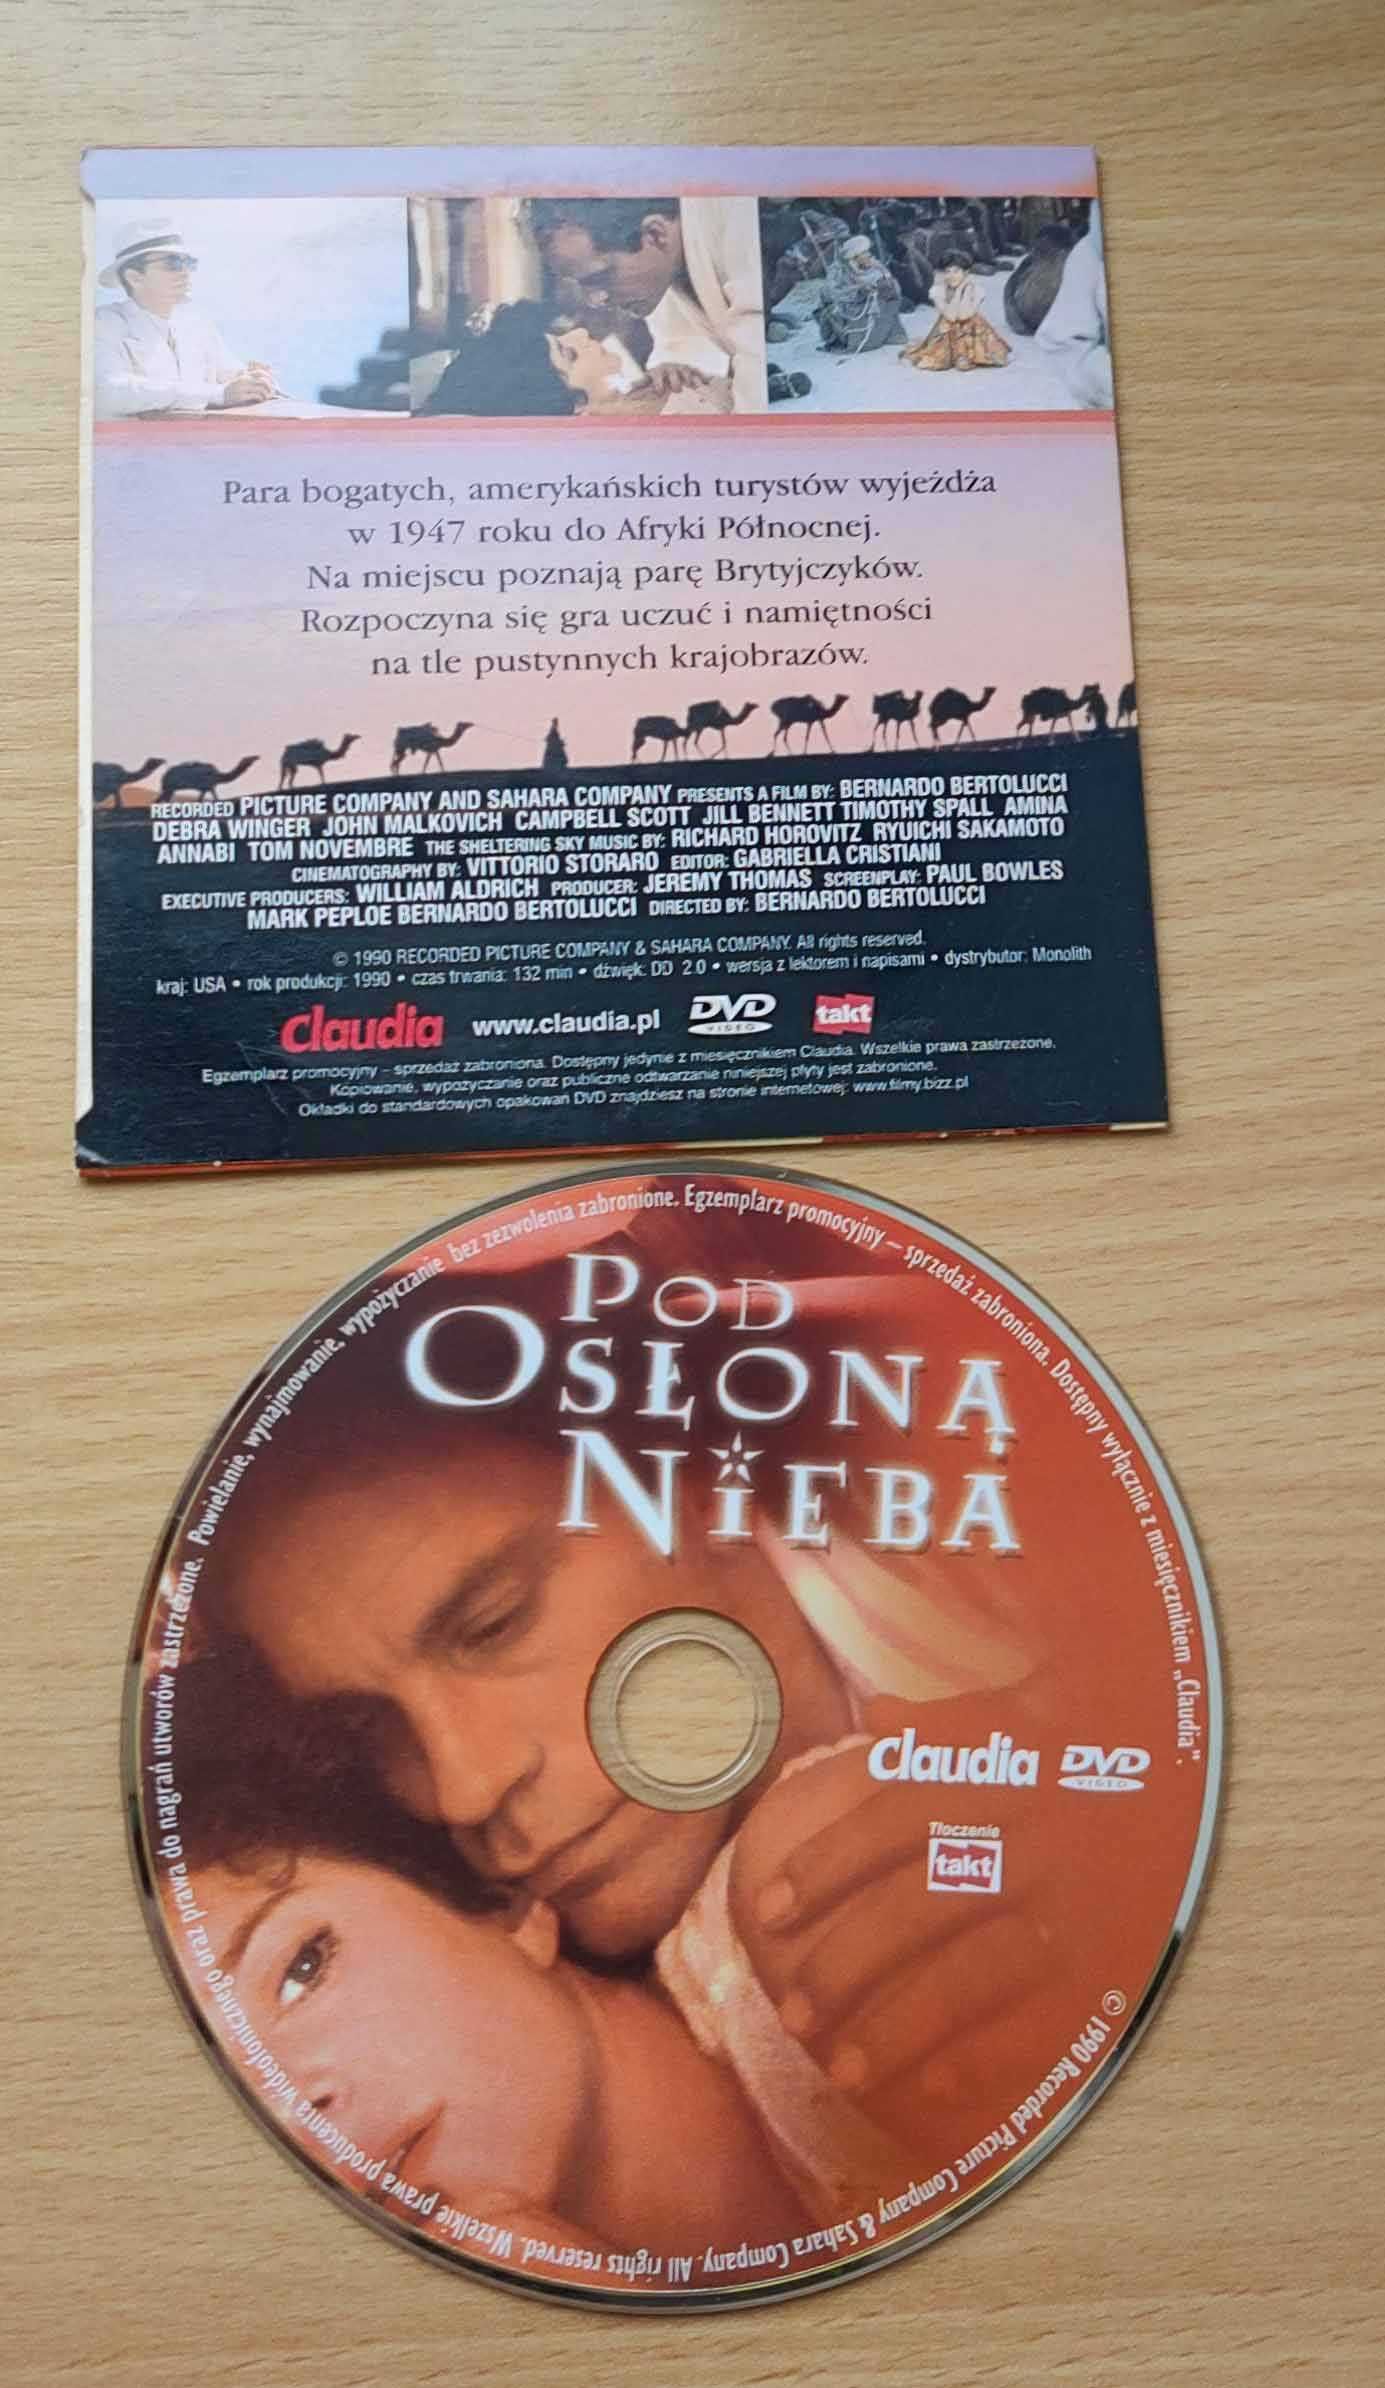 Pod osłoną nieba - film na płycie dvd - reż. Bernardo Bertolucci